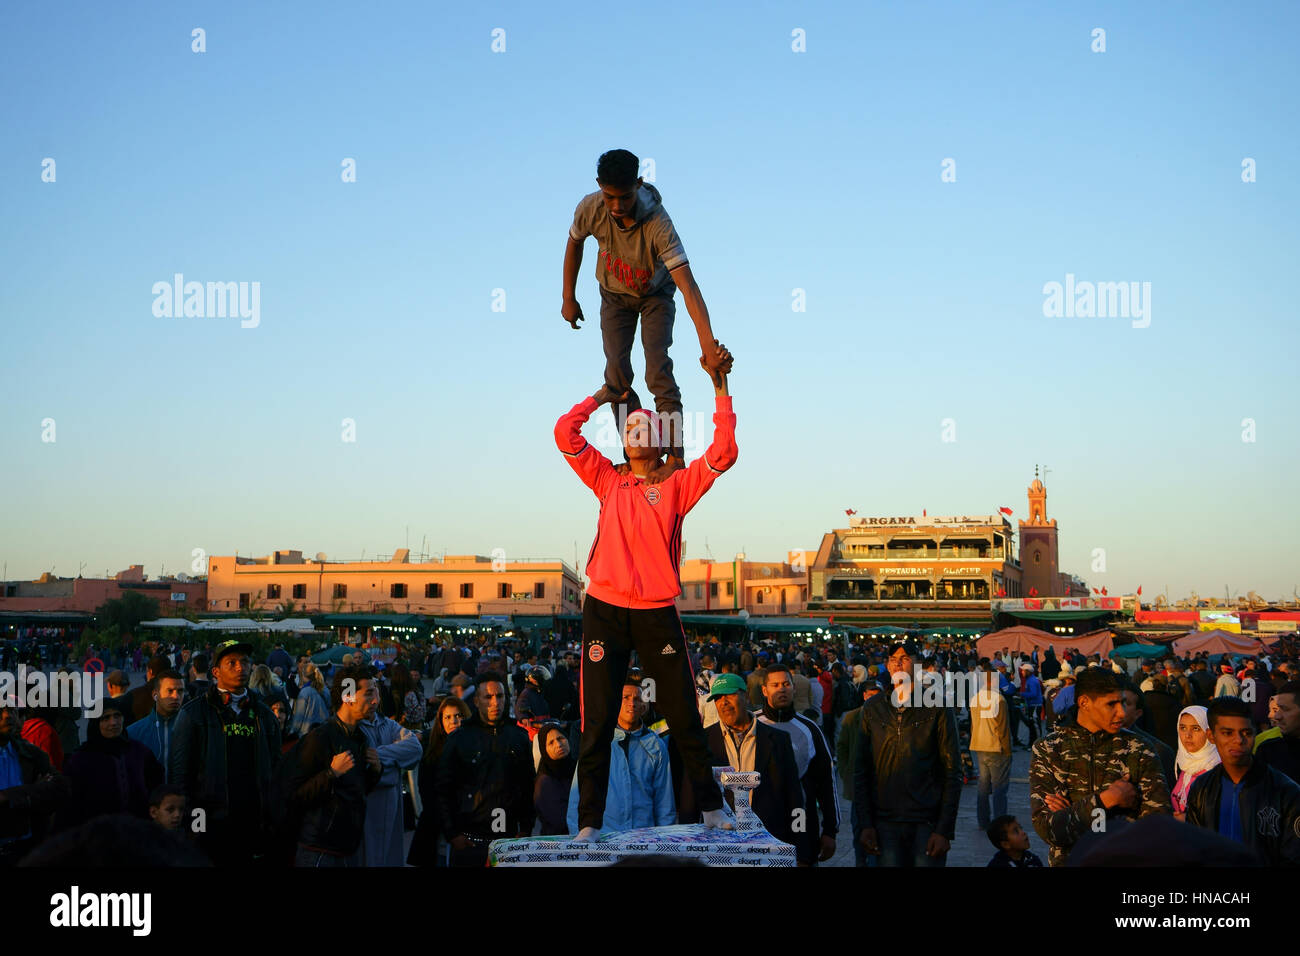 Yopung acrobatica personnes effectuant sur la place Jamaa El Fna, Marrakech, Maroc Banque D'Images